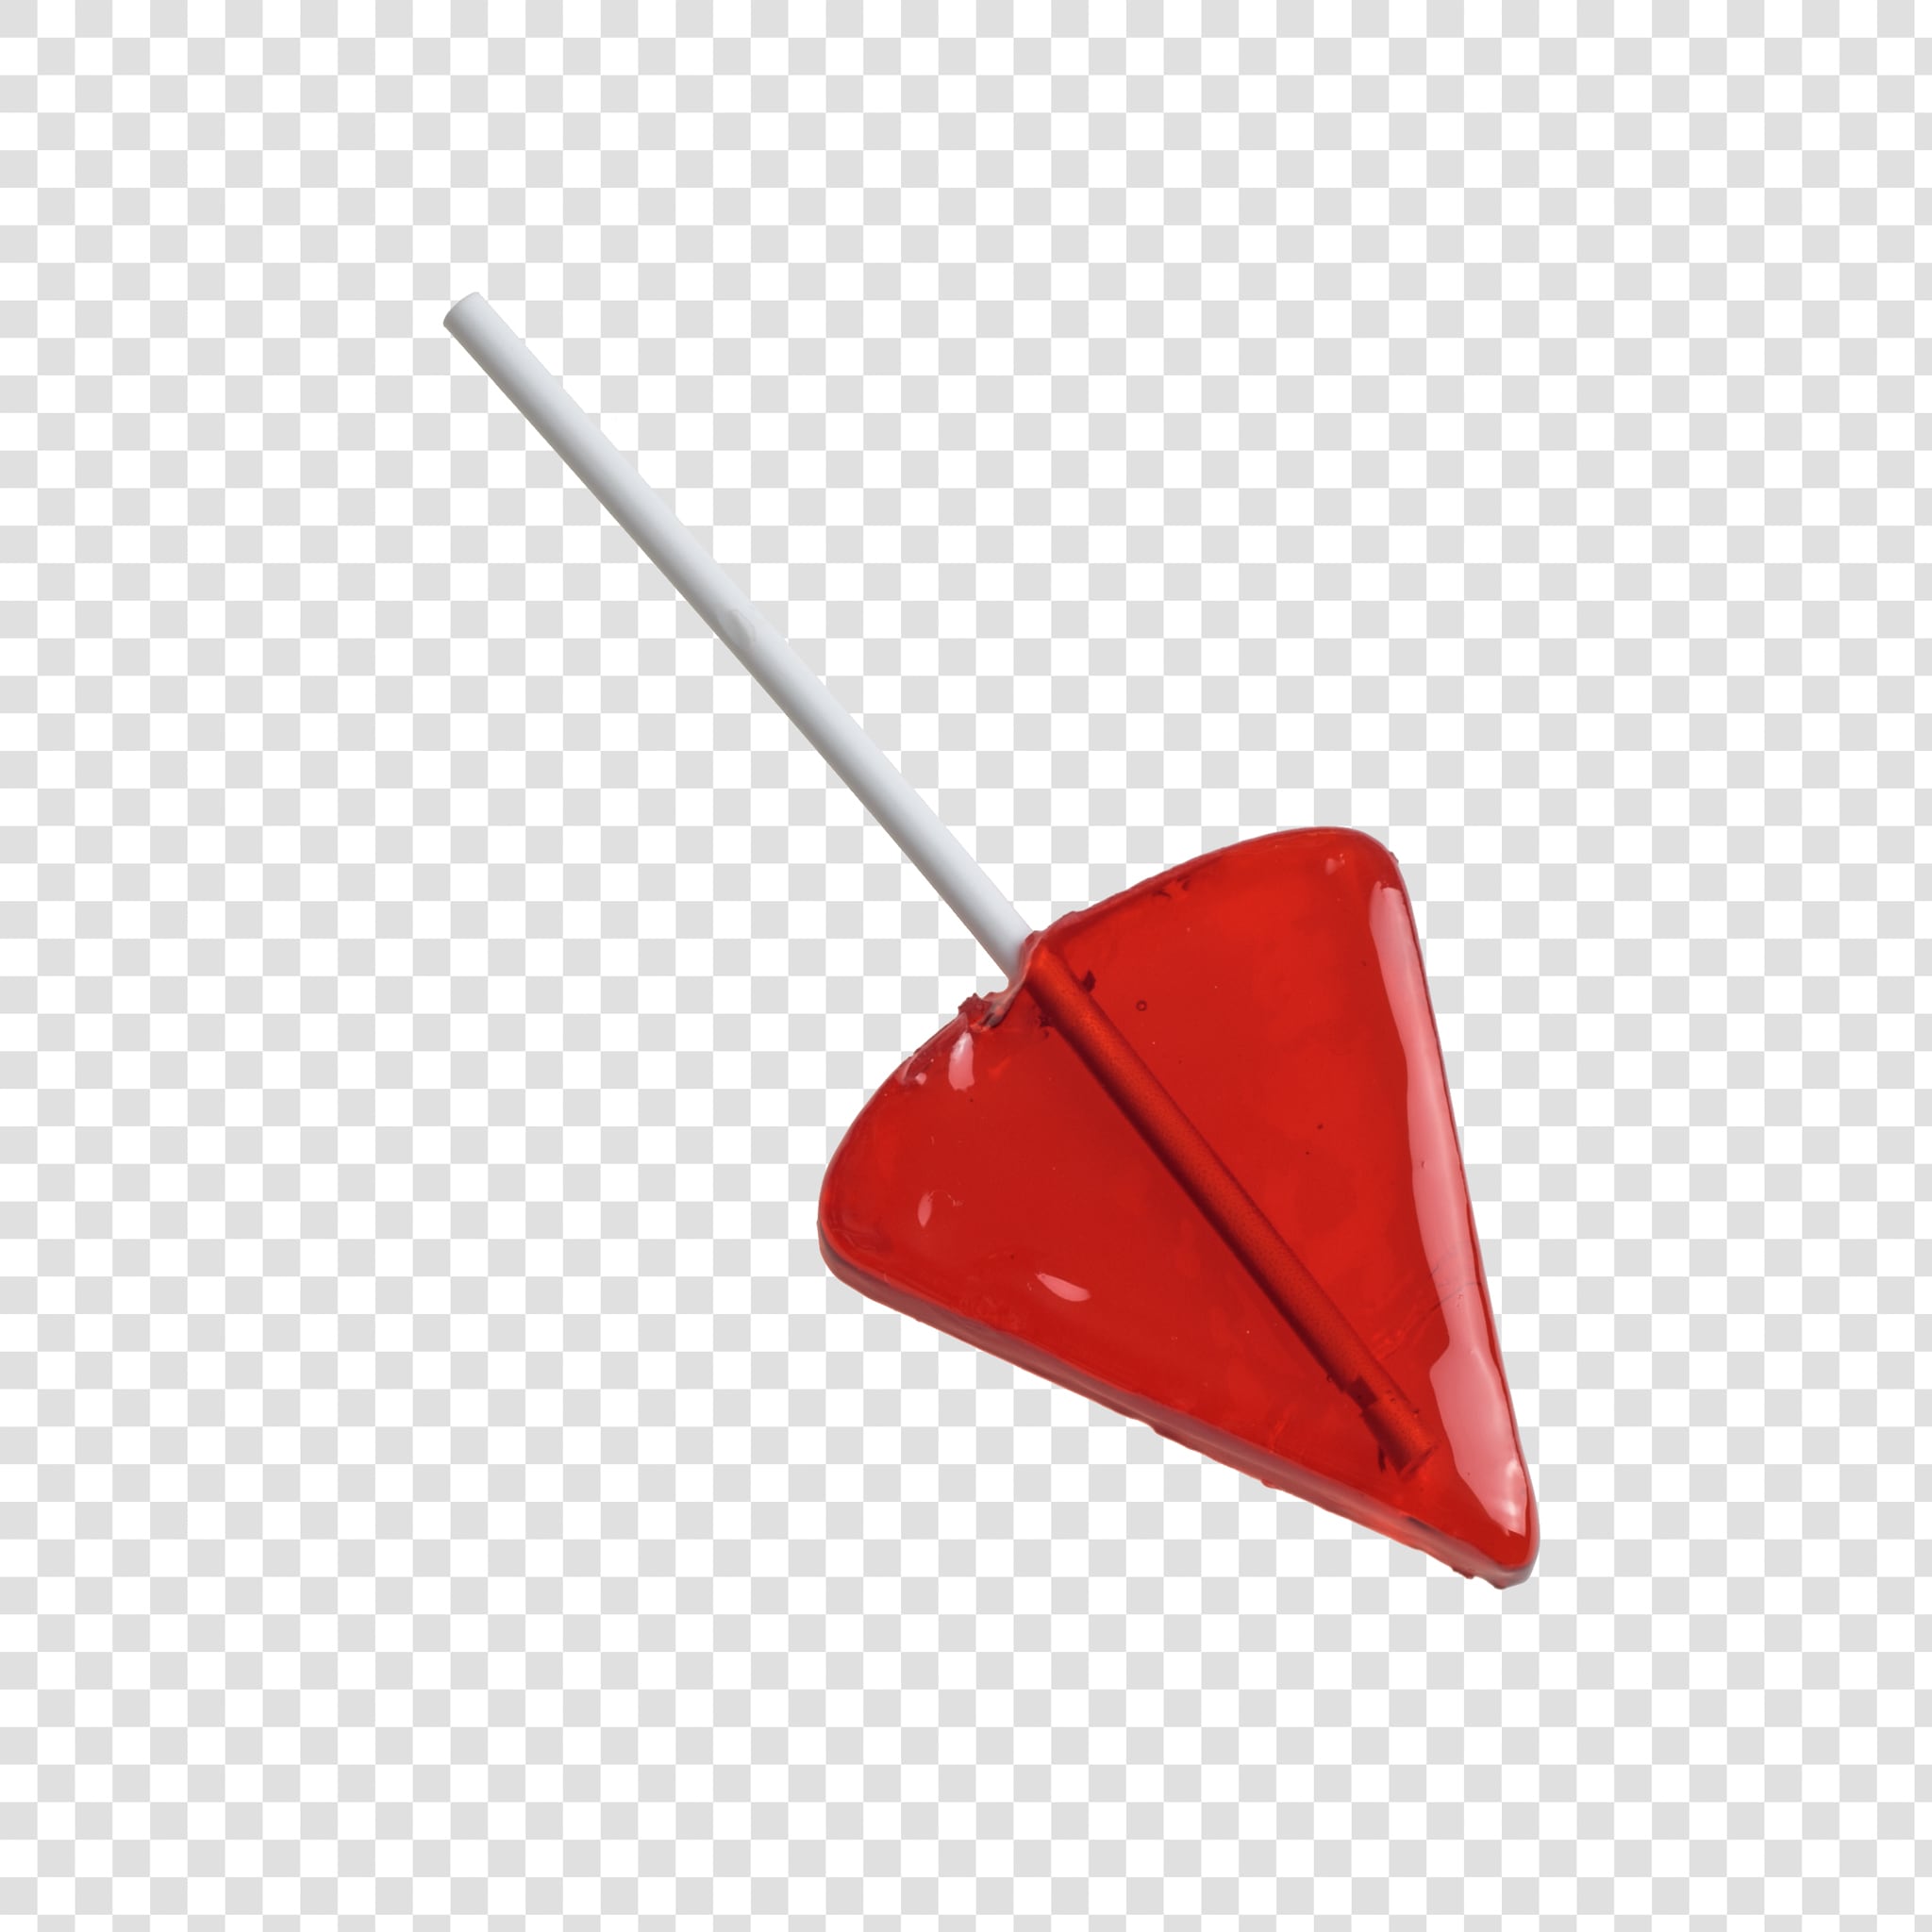 Lollipop PSD layered image